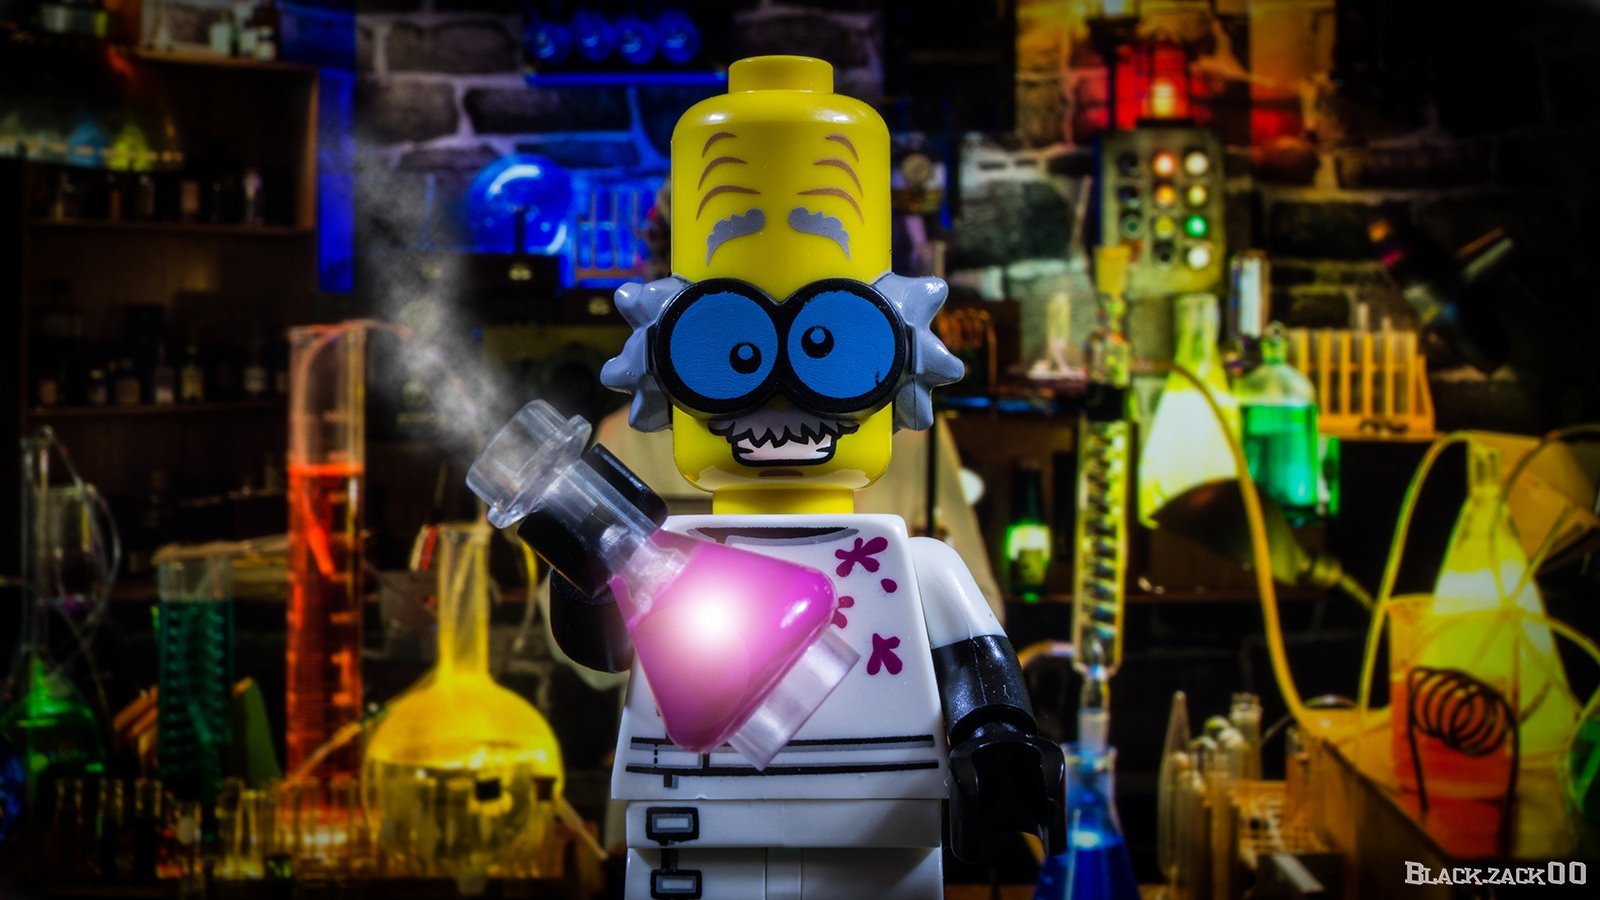 A LEGO scientist